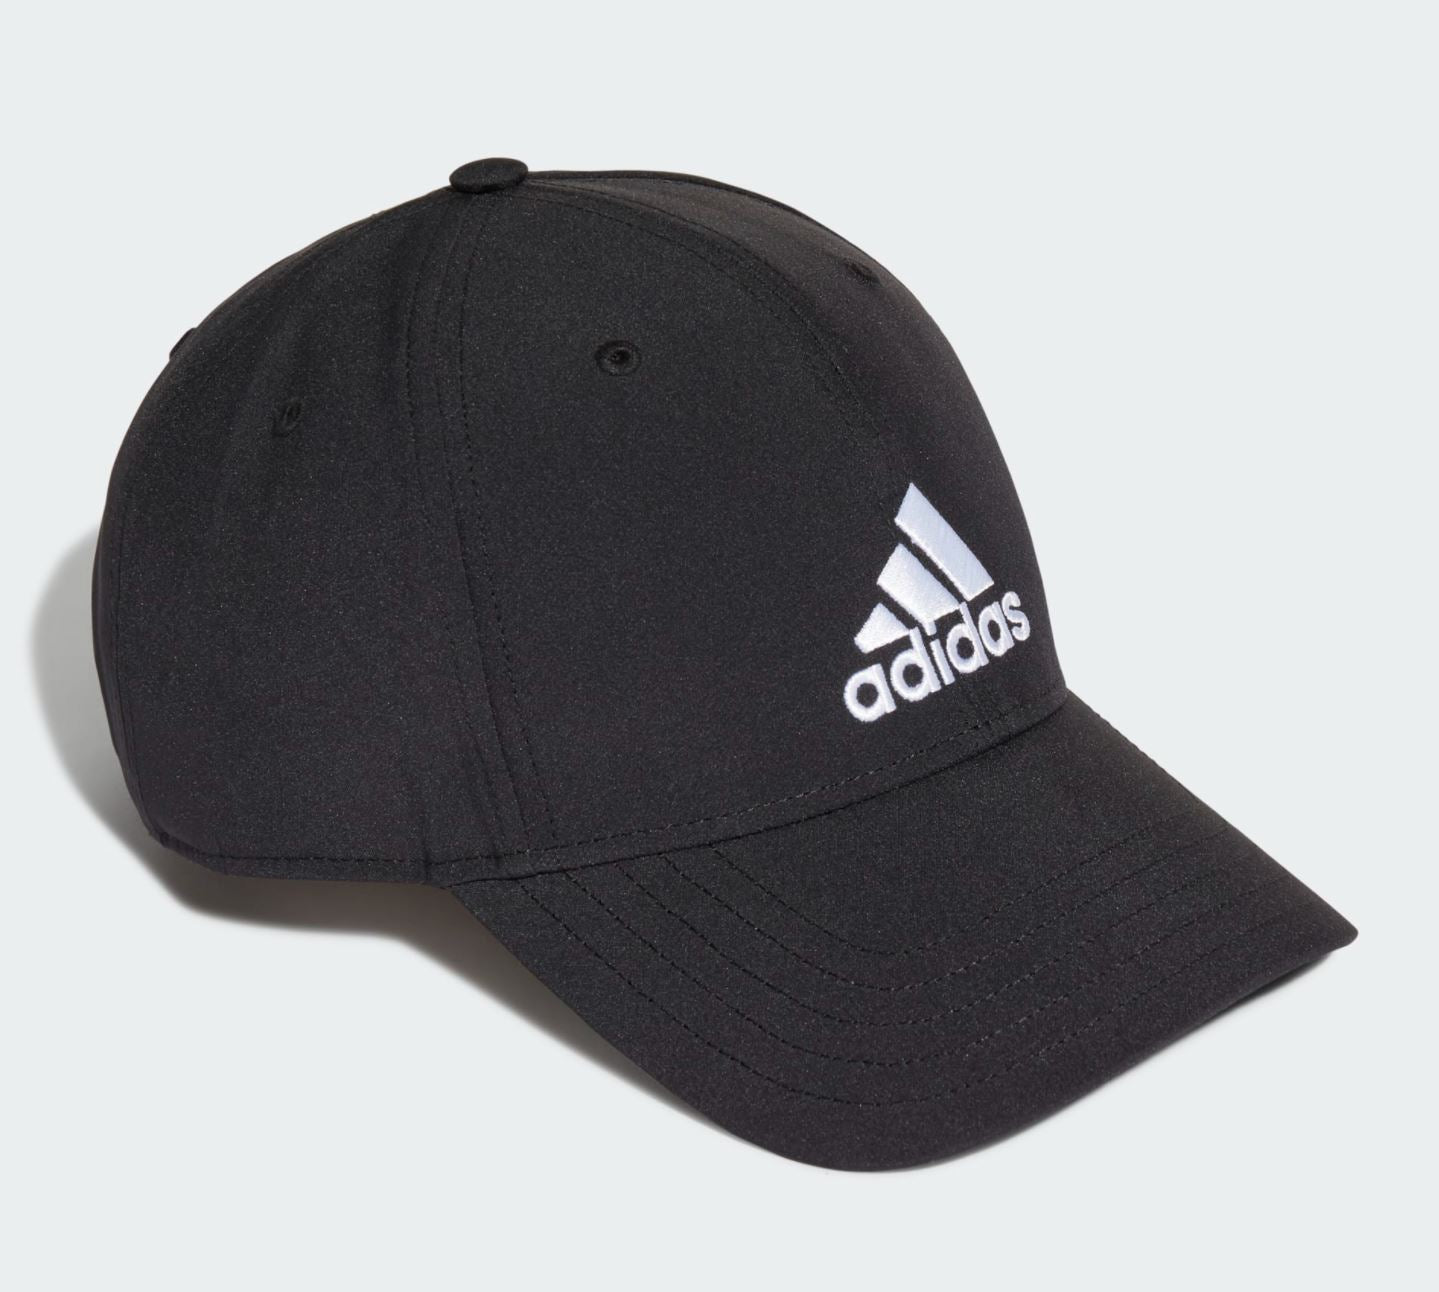 Adidas Baseball Cap (Schwarz)